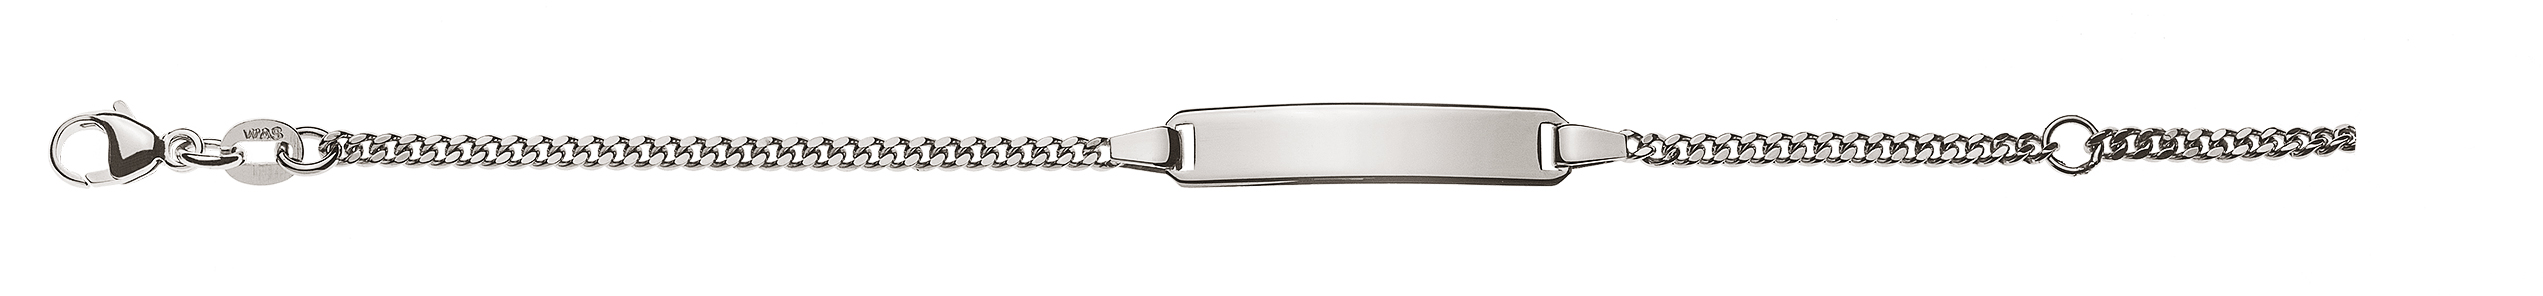 AURONOS Style ID-Bracelet 9k white gold curb chain polished 16cm